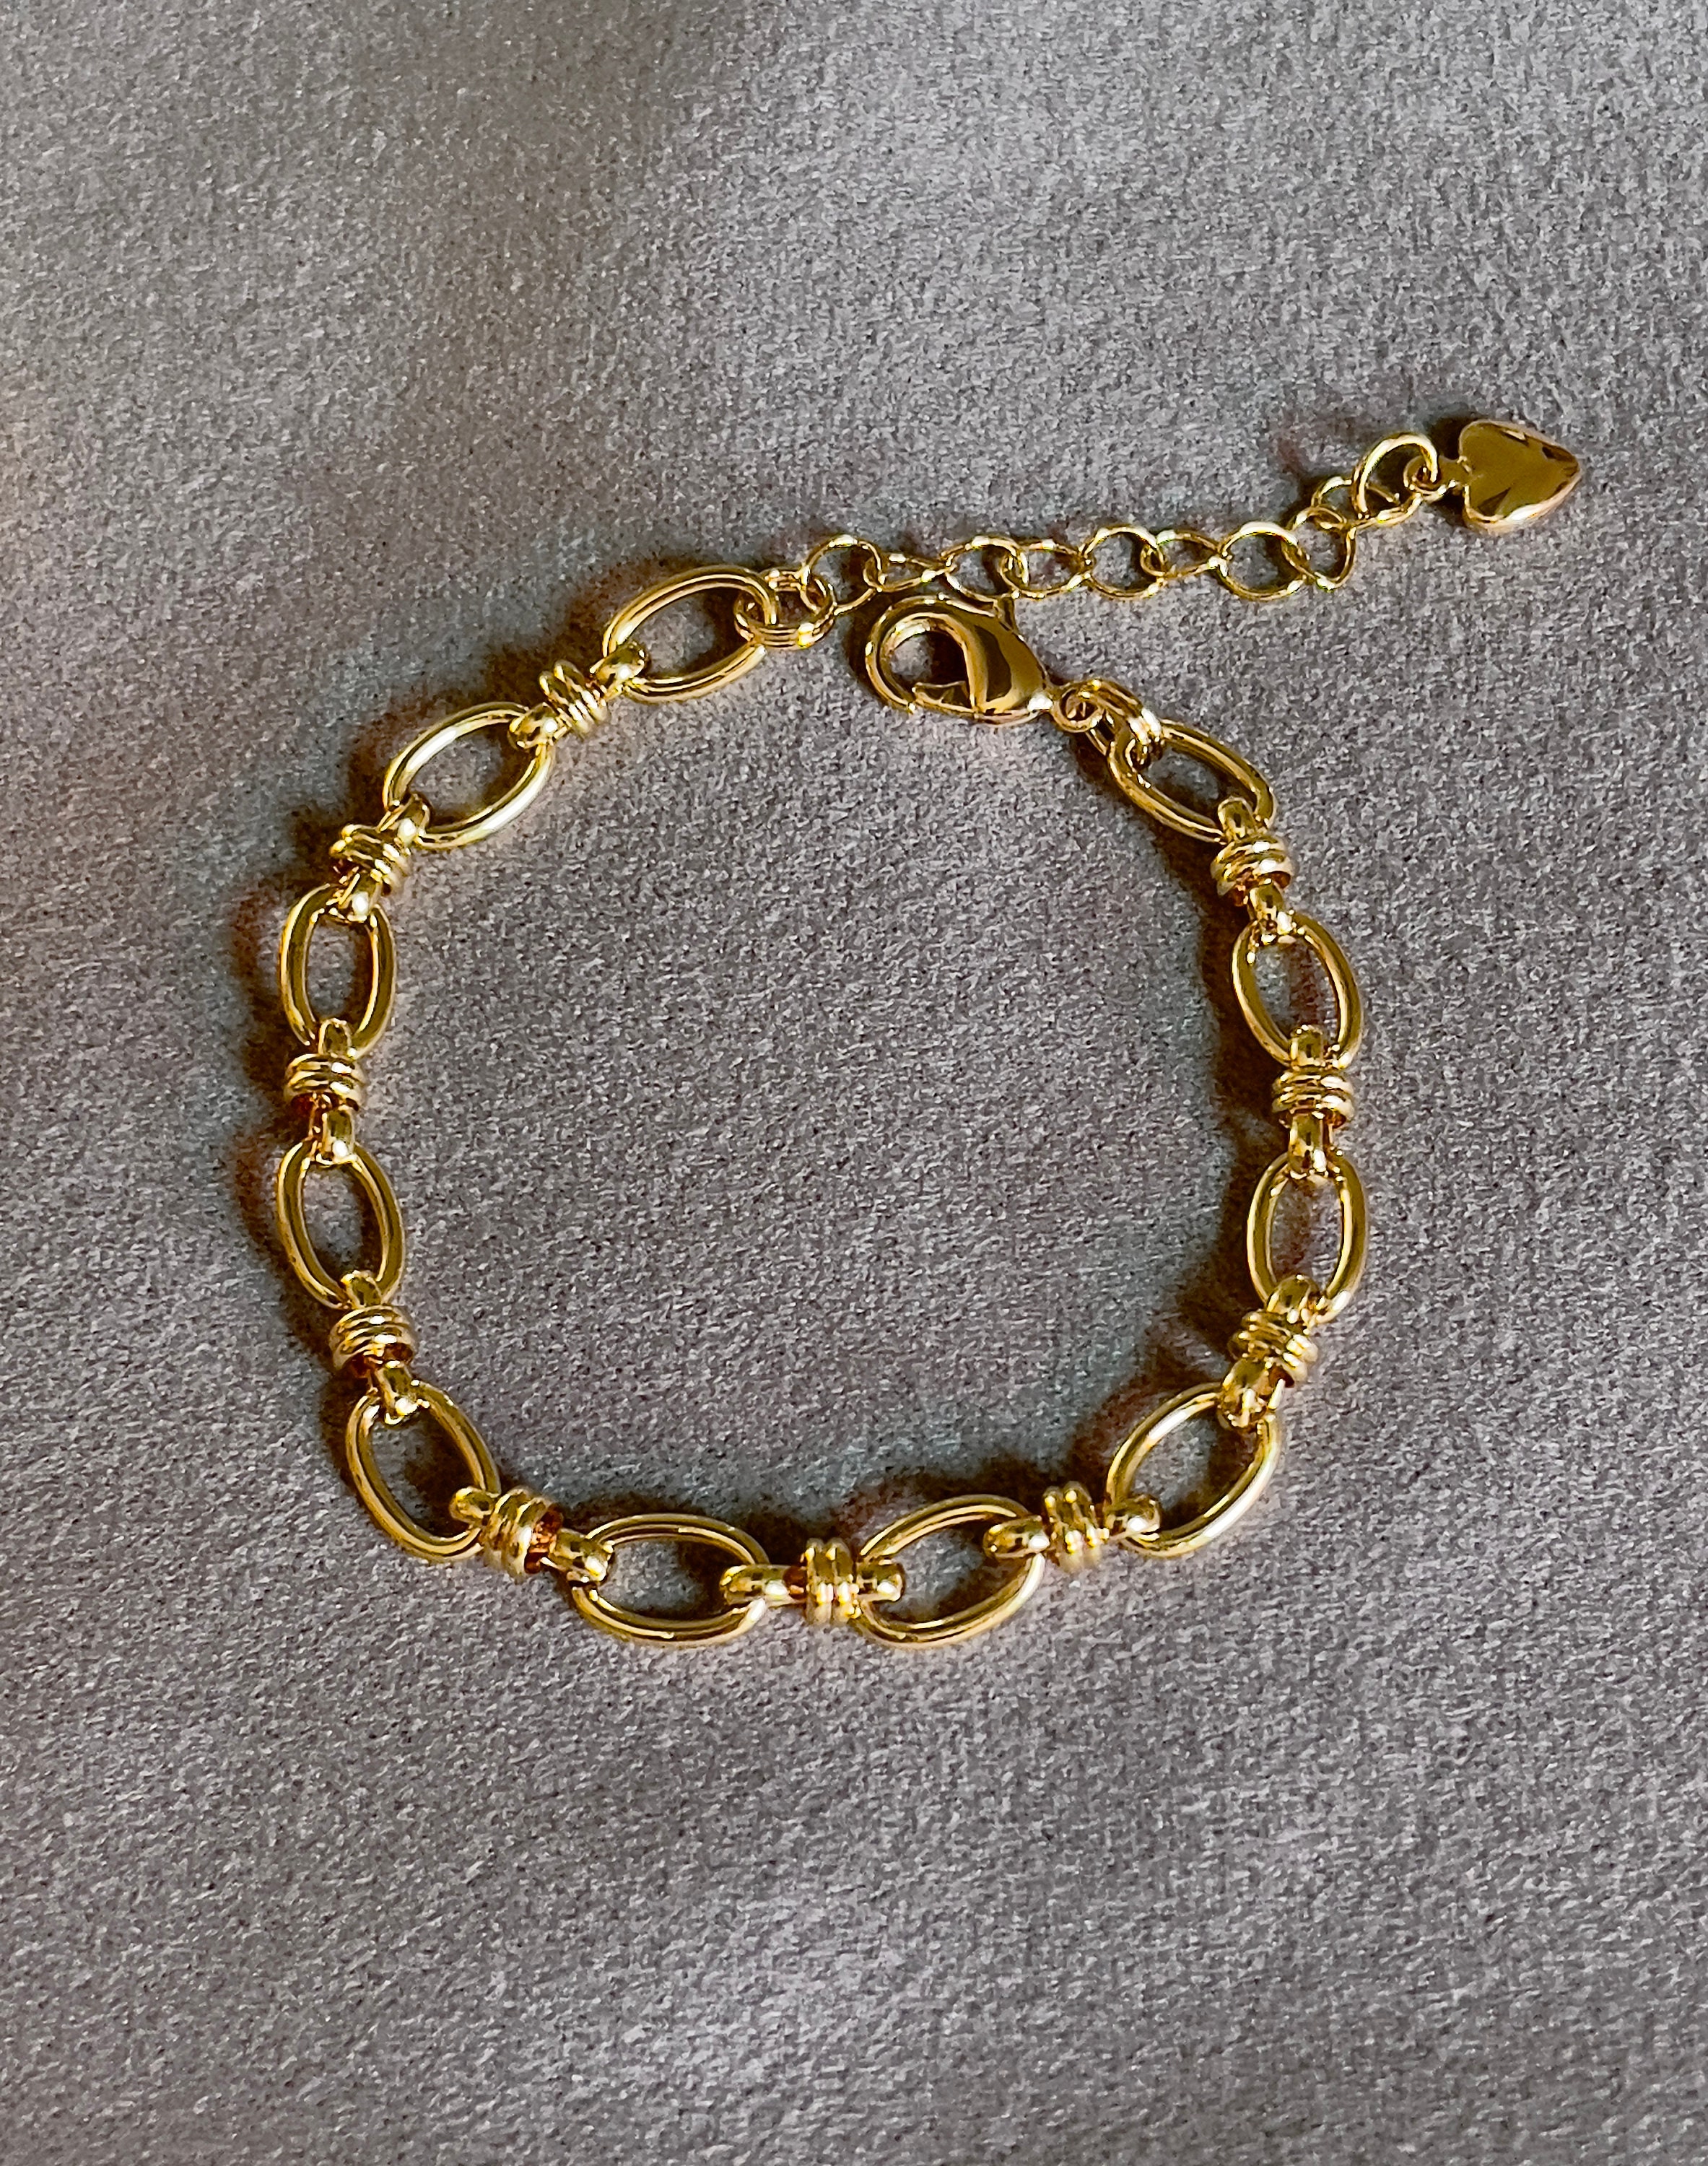 24K Solid Yellow Gold Dragon Bracelet 58.1 Grams – Royal Venture Elite Inc